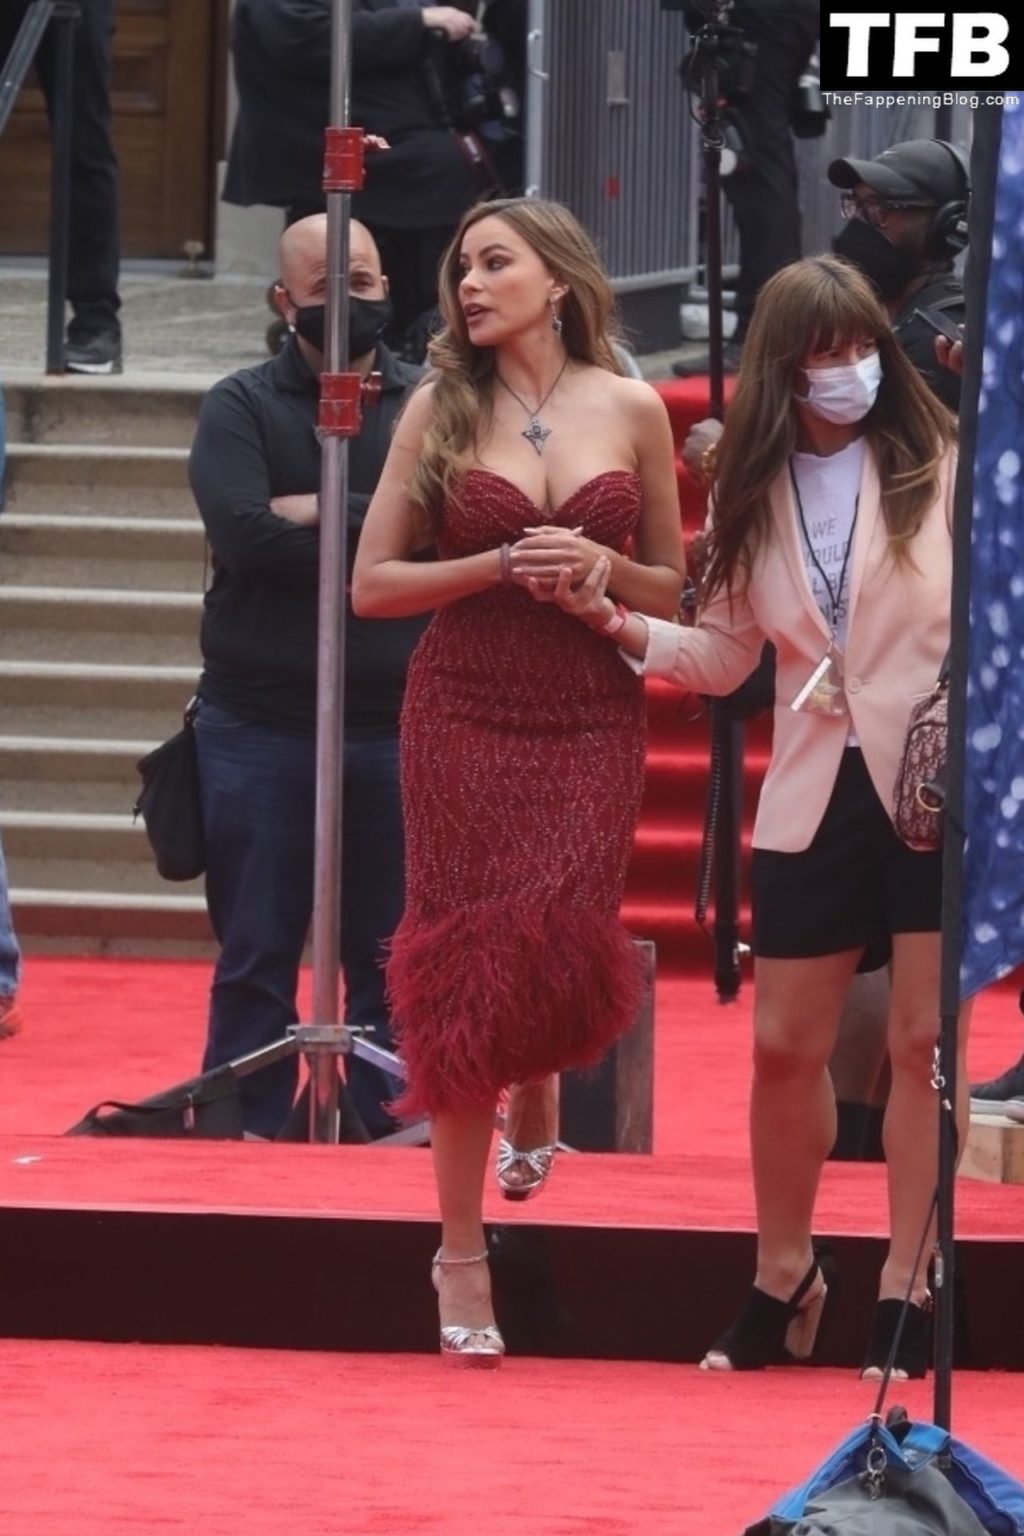 Sofía Vergara Displays Her Stunning Figure in a Red Dress at the ‘America’s Got Talent’ Season 17 Kick-Off in LA (134 Photos)